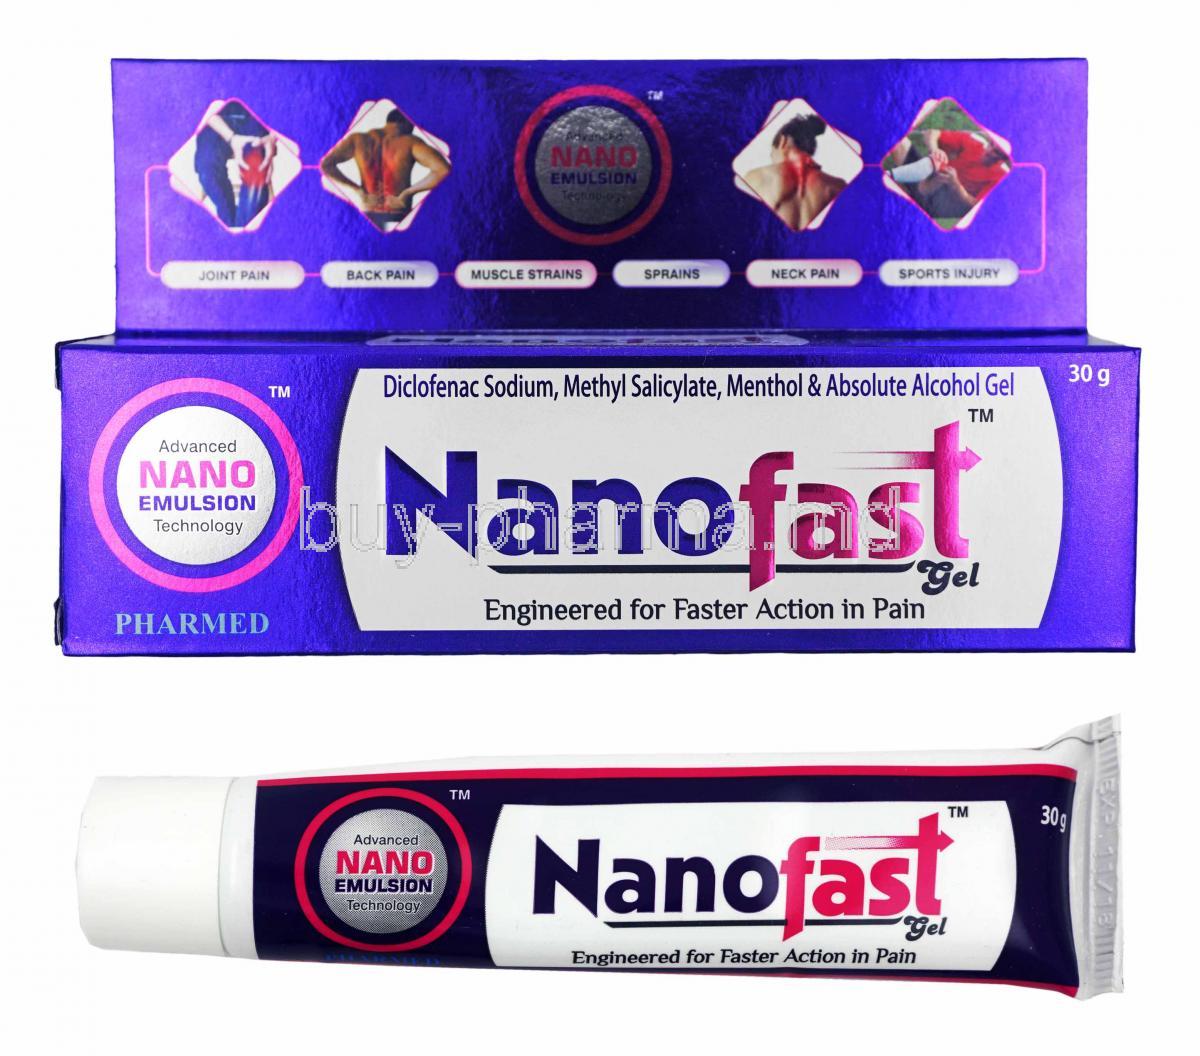 Nanofast Gel, Diclofenac Sodium, Methyl Salicylate, Menthol and Absolute Alcohol box and tube